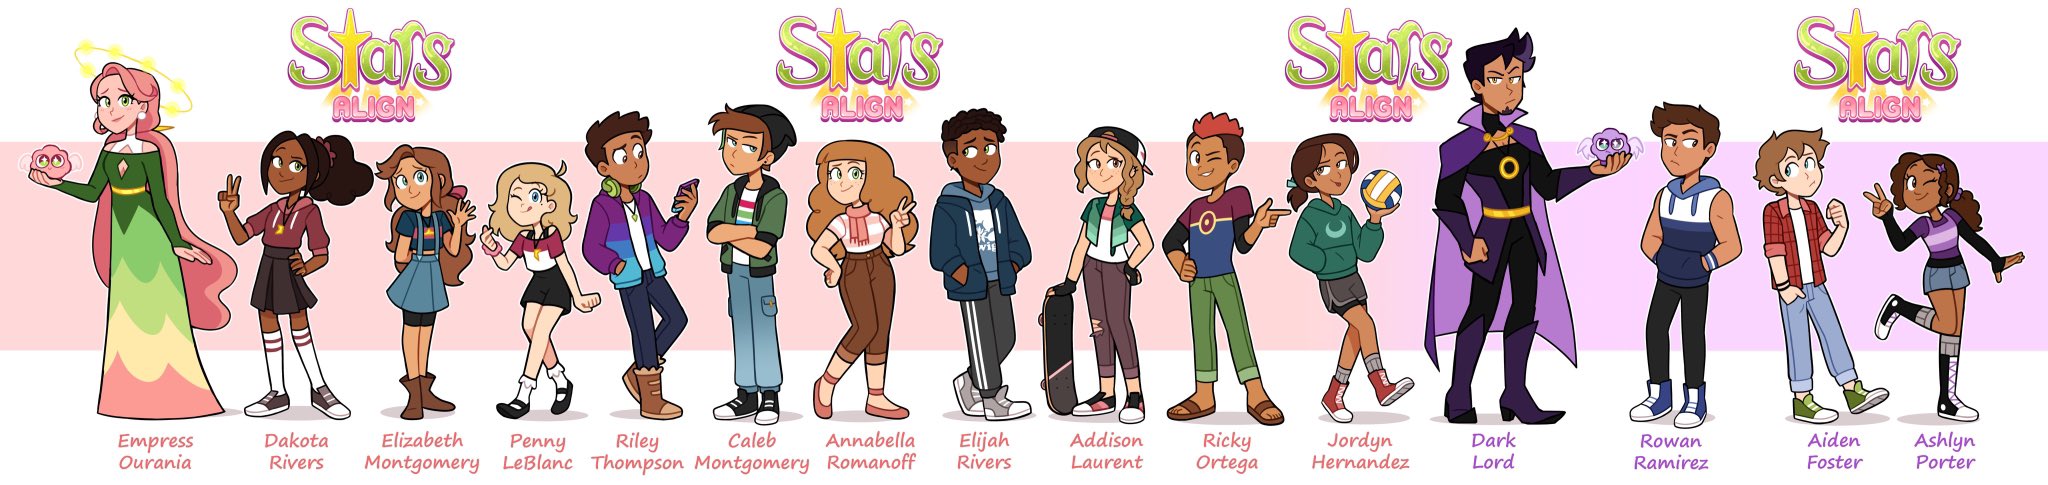 Stars Align Cast Lineup